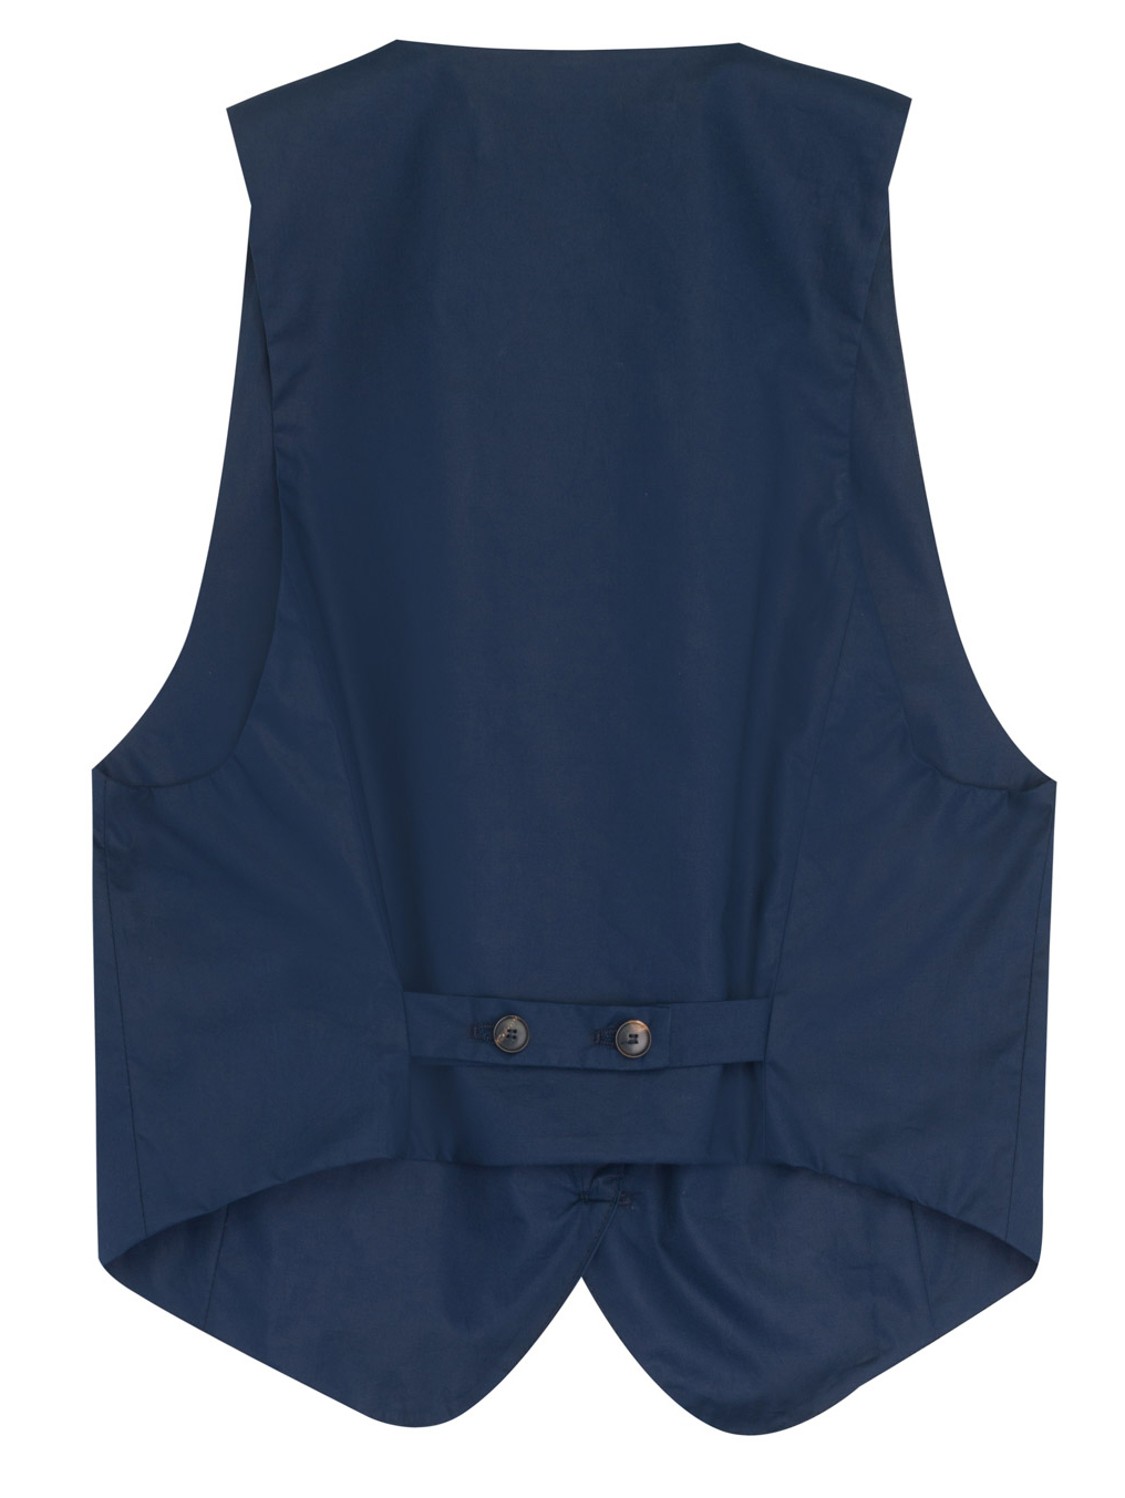 shop Tela  Vest: Vest Tela, Brunei model, gilet under blazer, front buttons closure, lateral pockets,

Composition: 100% cotton. number 2558